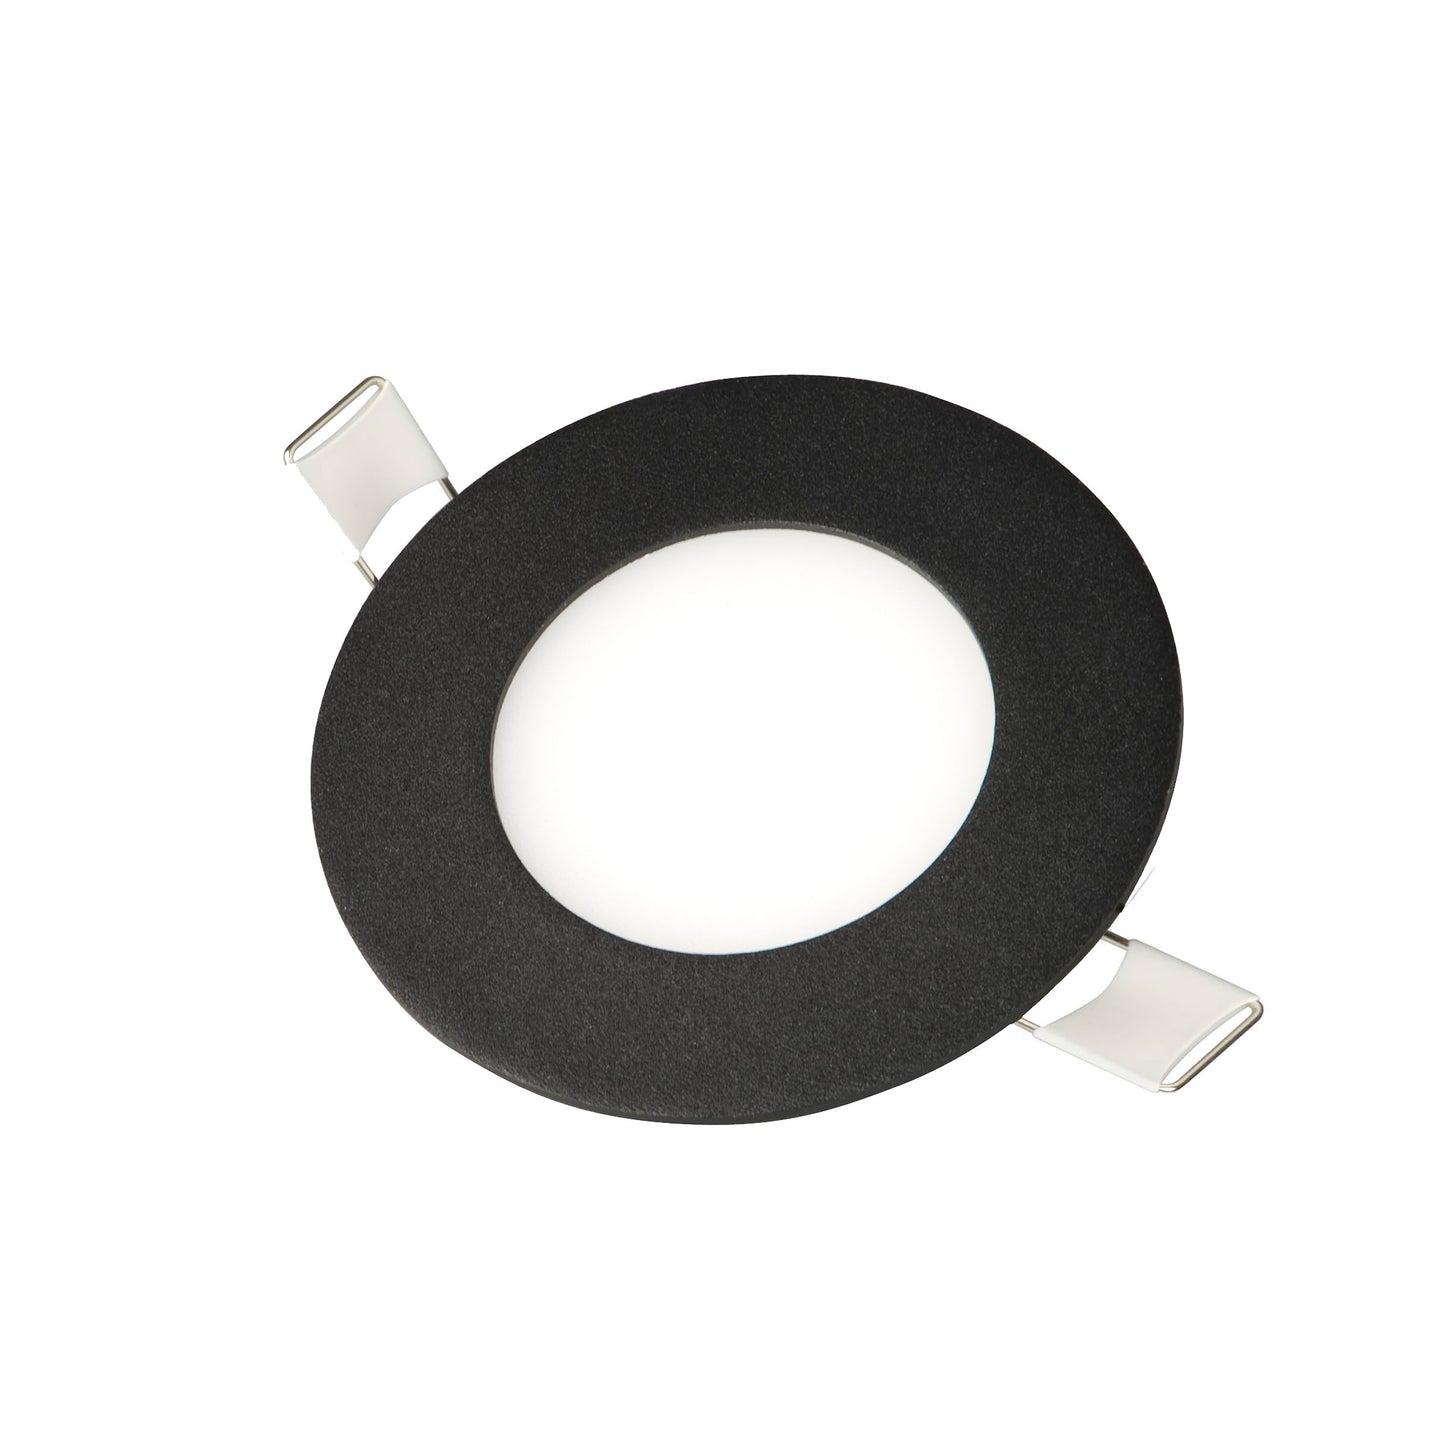 LED downlighter | Inbouw | 3 watt | 3000K modern warm wit | Mat zwart